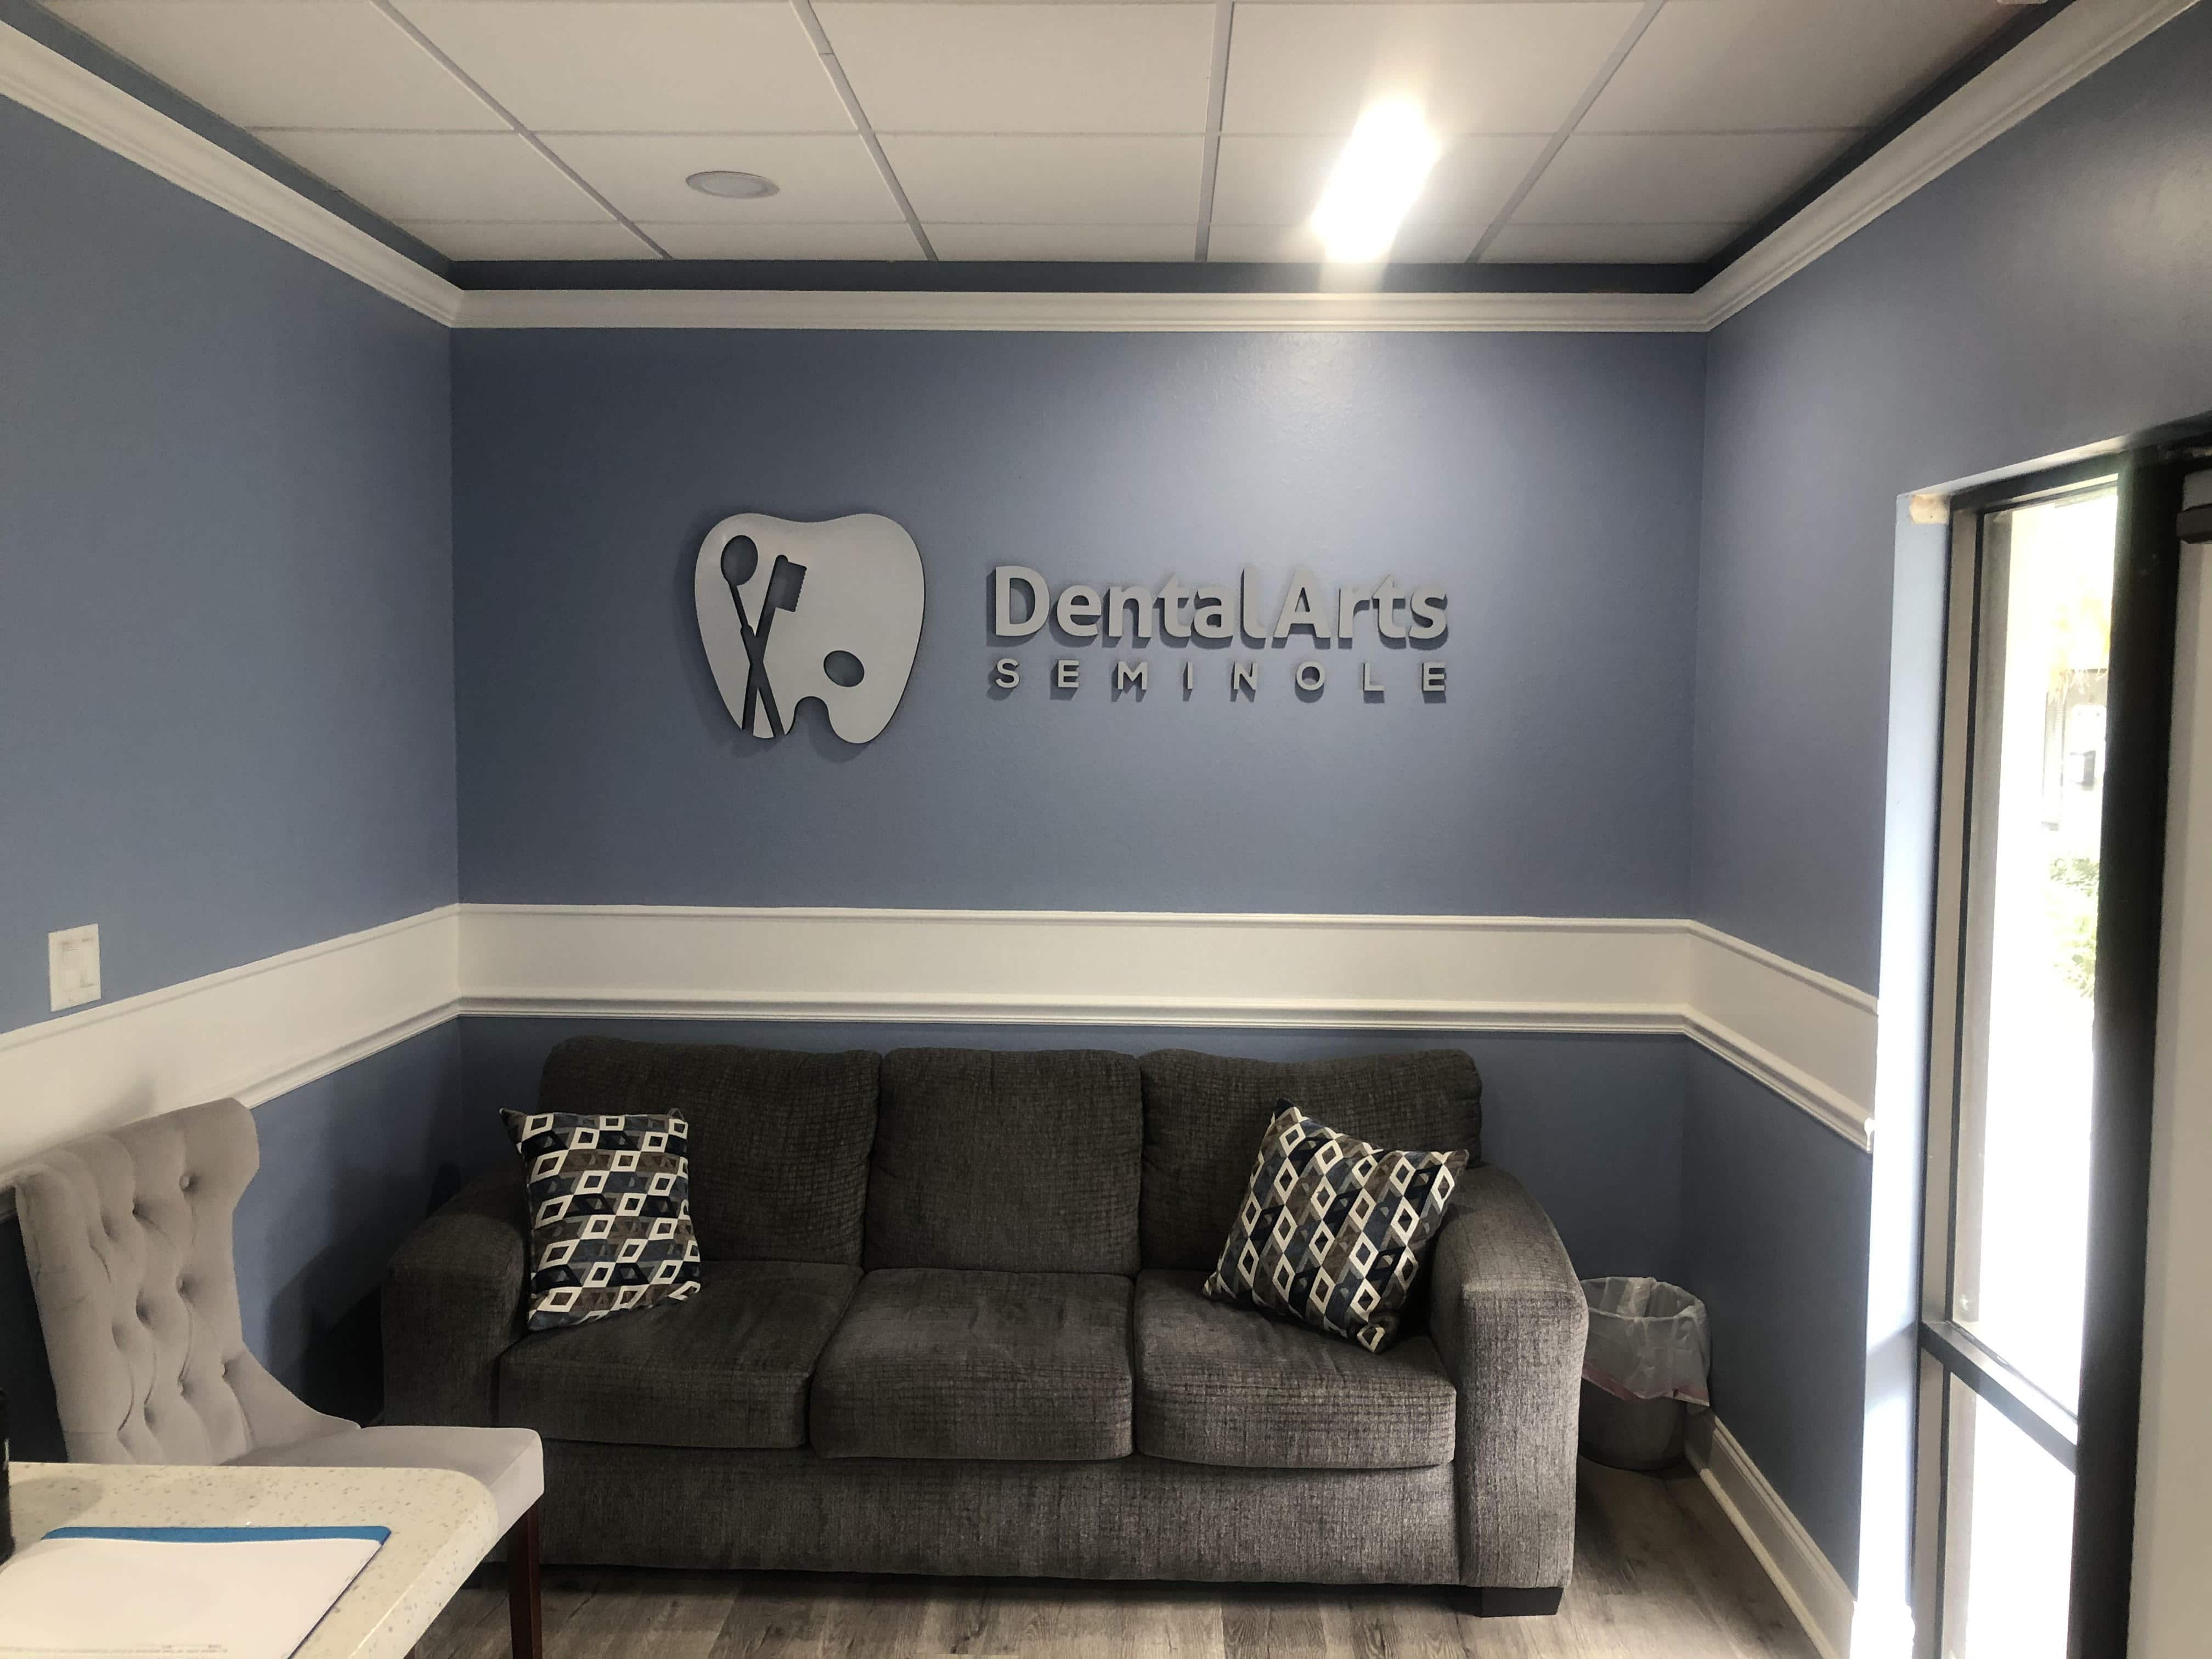 Dental Arts Seminole, US, veneer teeth